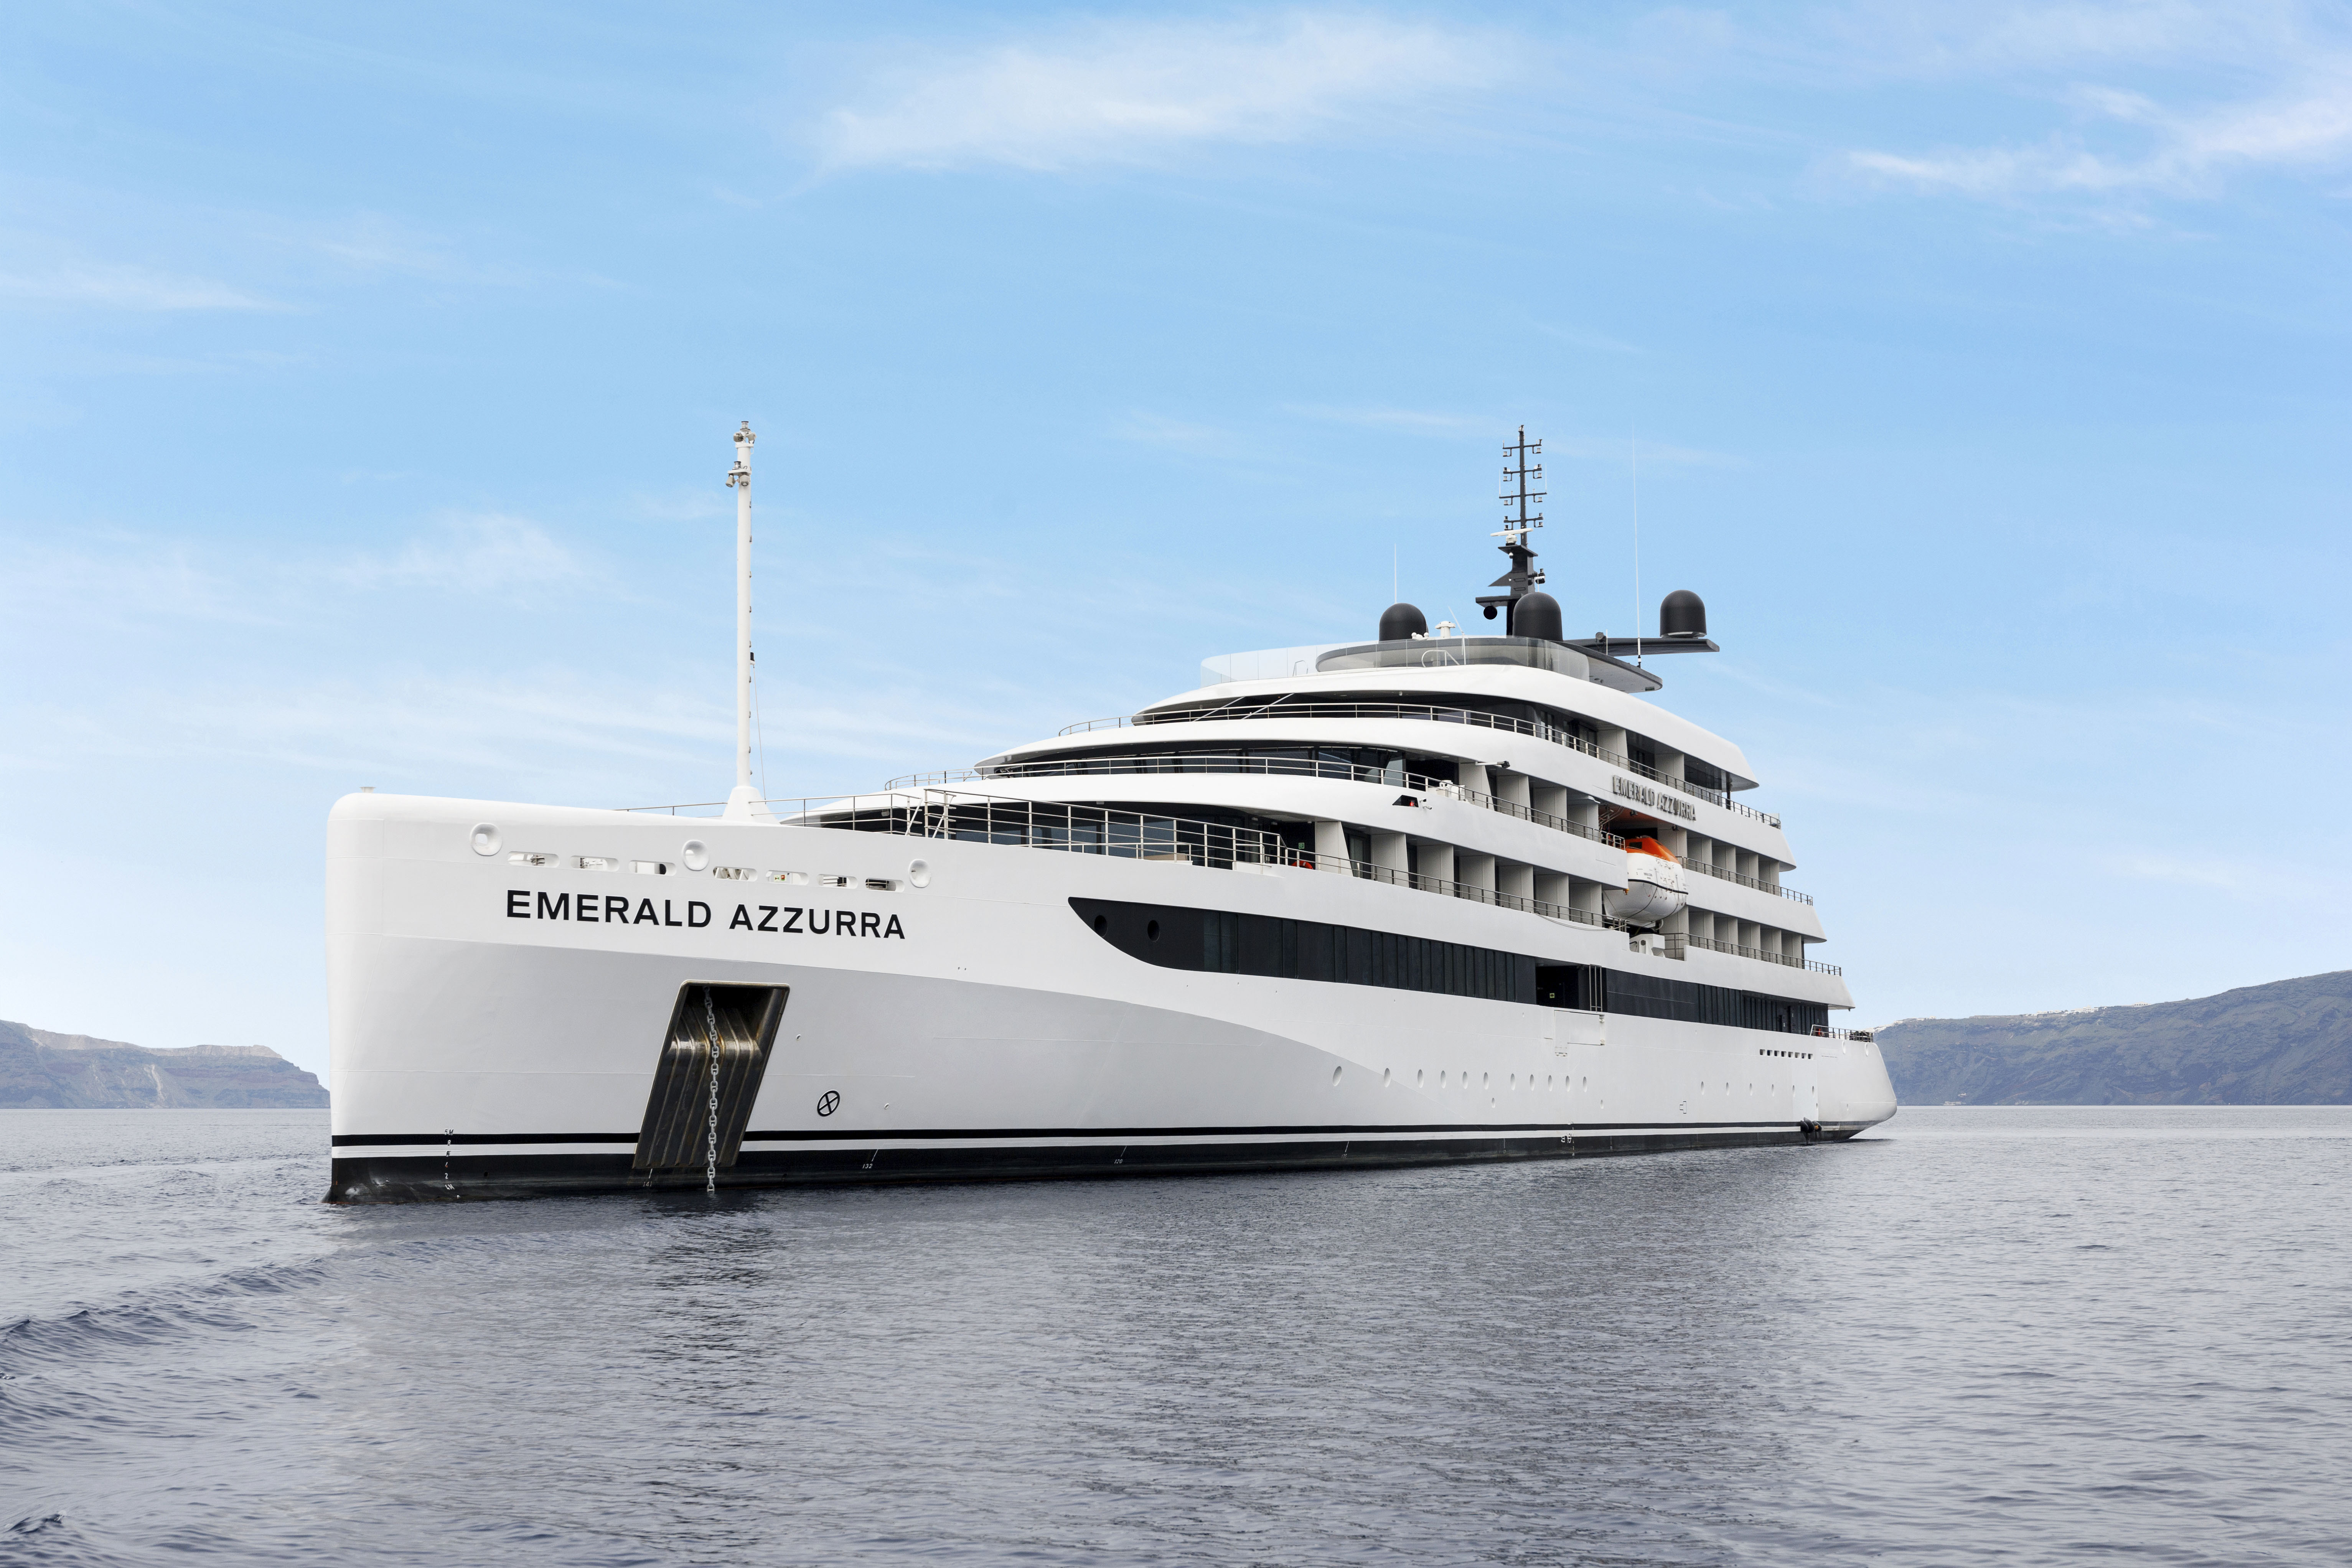 Emerald Azzurra - Santorini; Scenic Gruppe - Luxus-Yachtkreuzfahrten - Pressearbeit uschi liebl pr